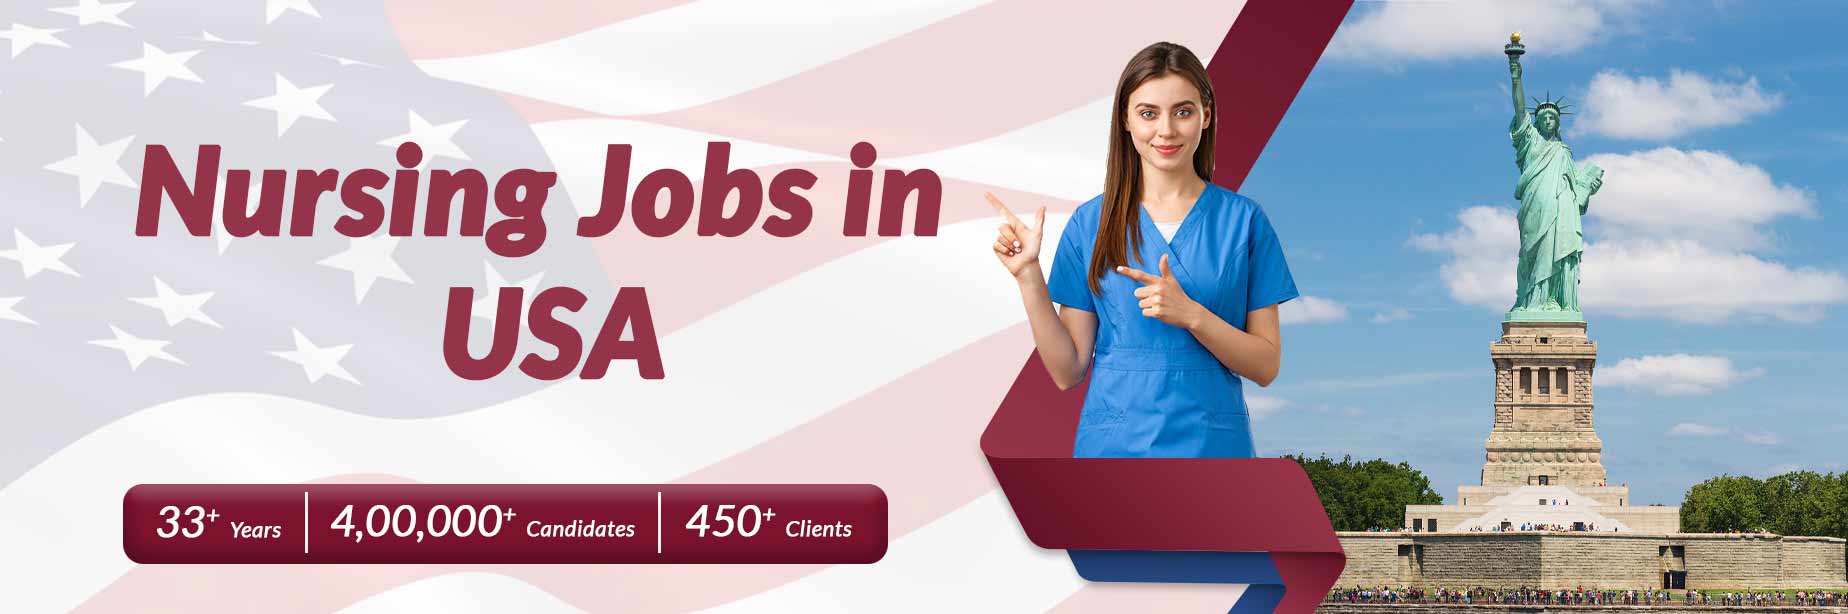 Nursing Jobs in USA